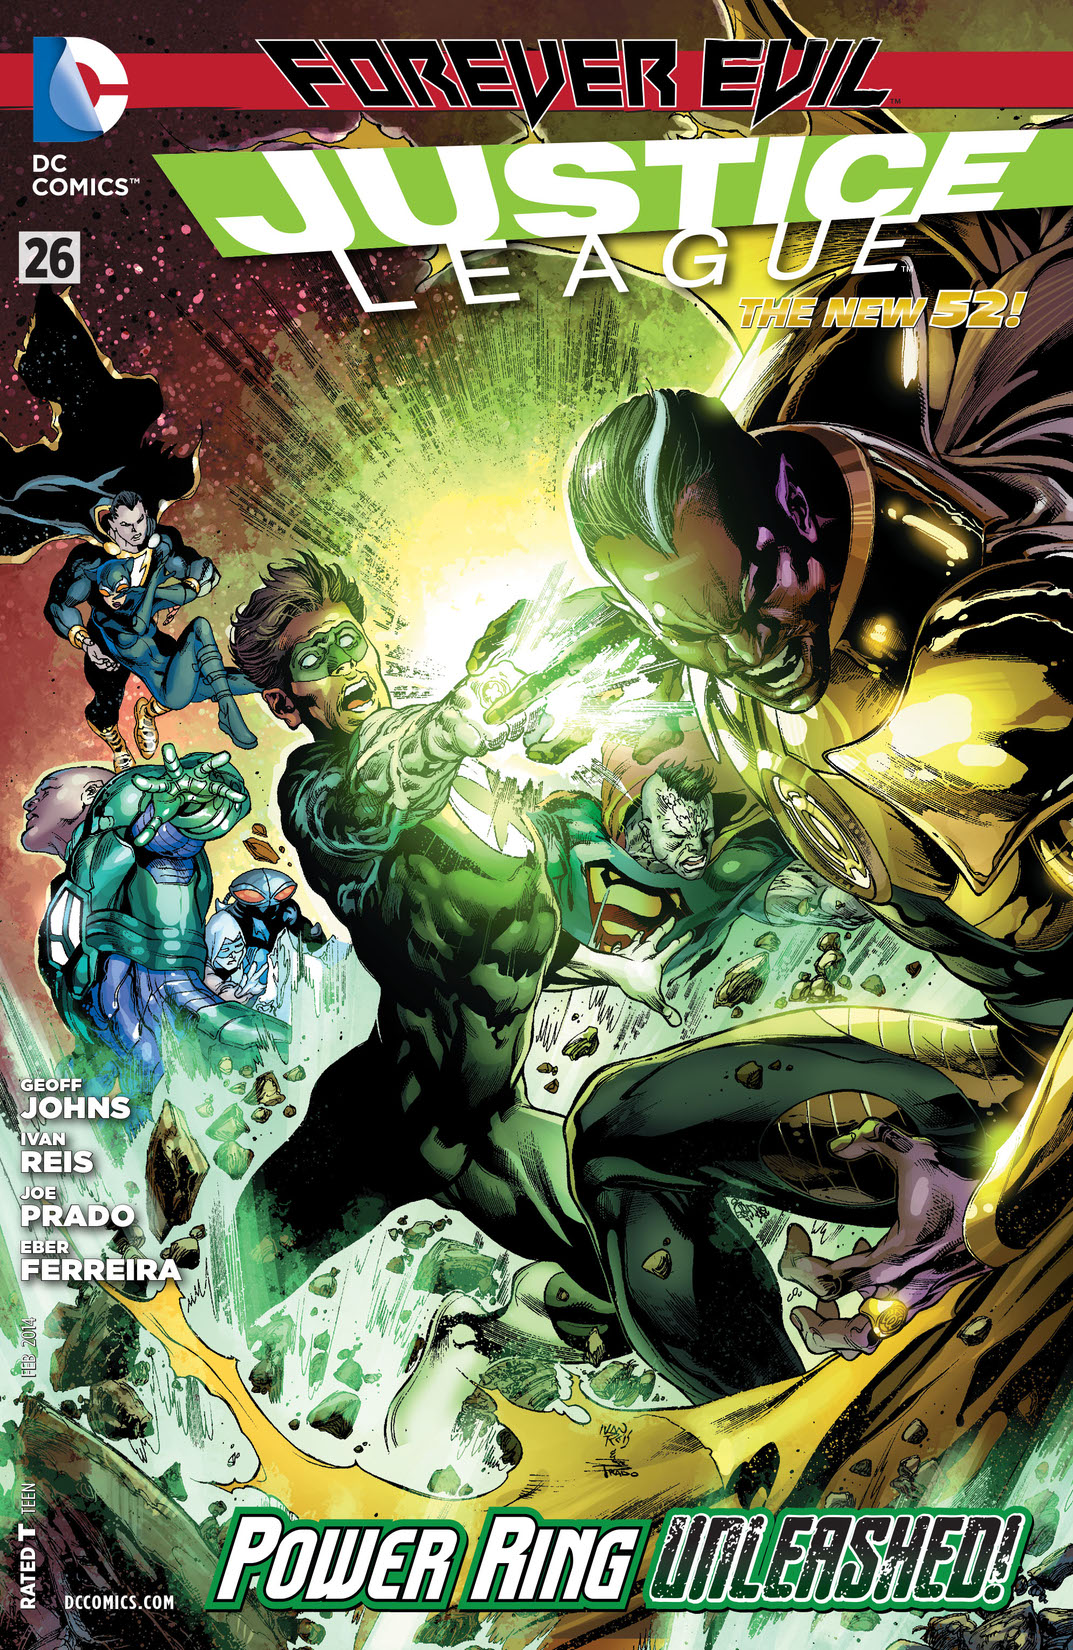 Justice League (2011-) #26 preview images